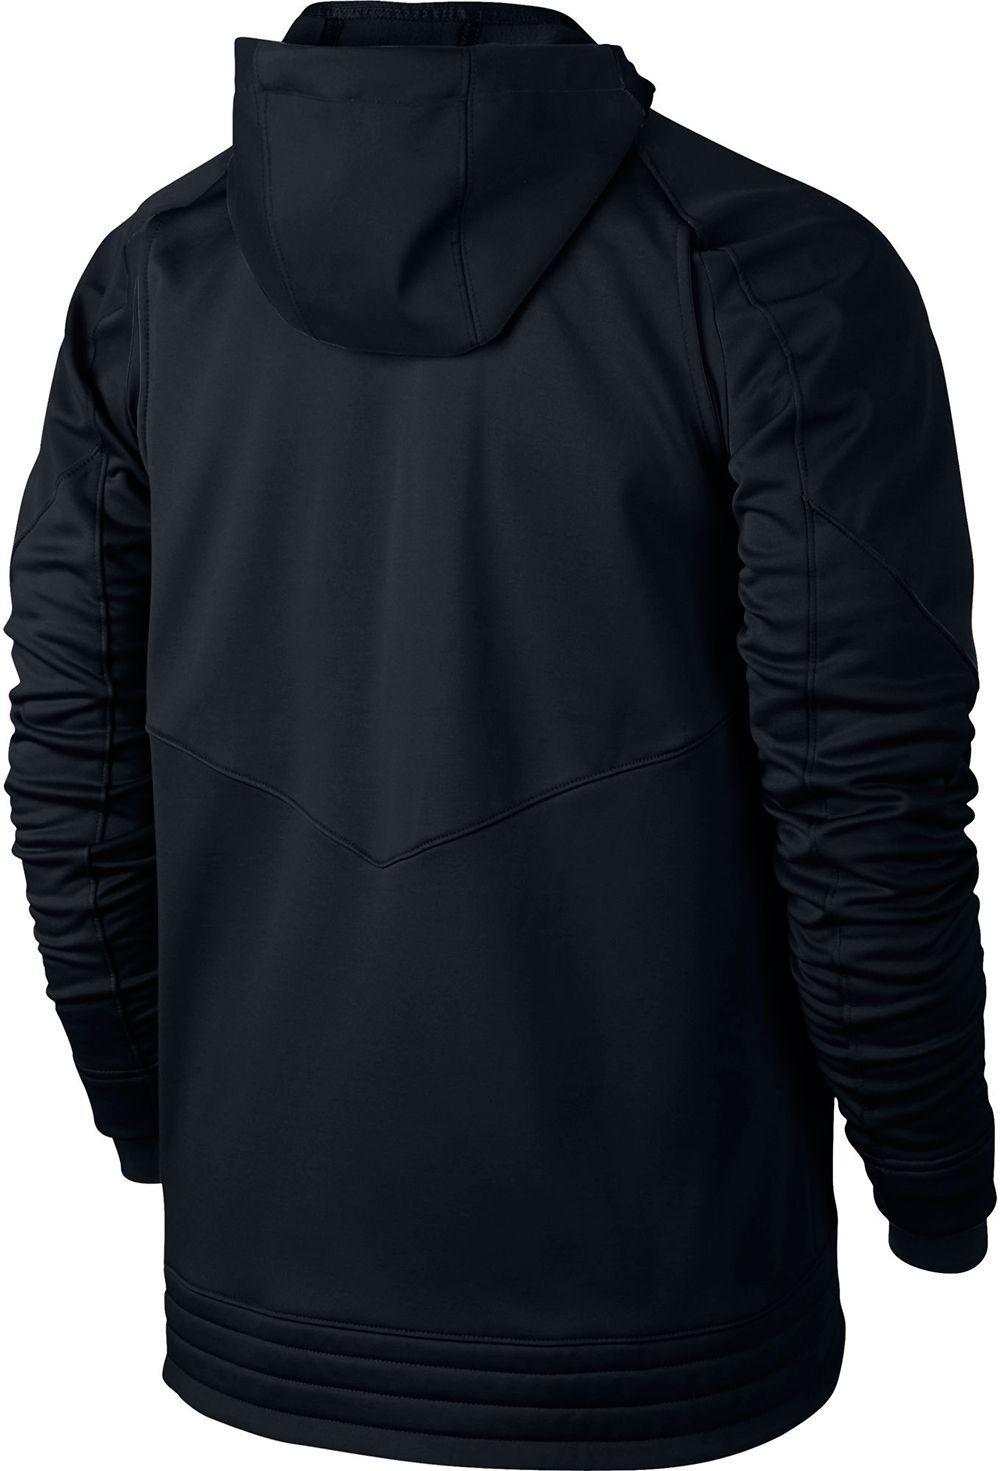 Nike Hyper Elite Winterized Motion Full Zip Basketball Hoodie in Black ...